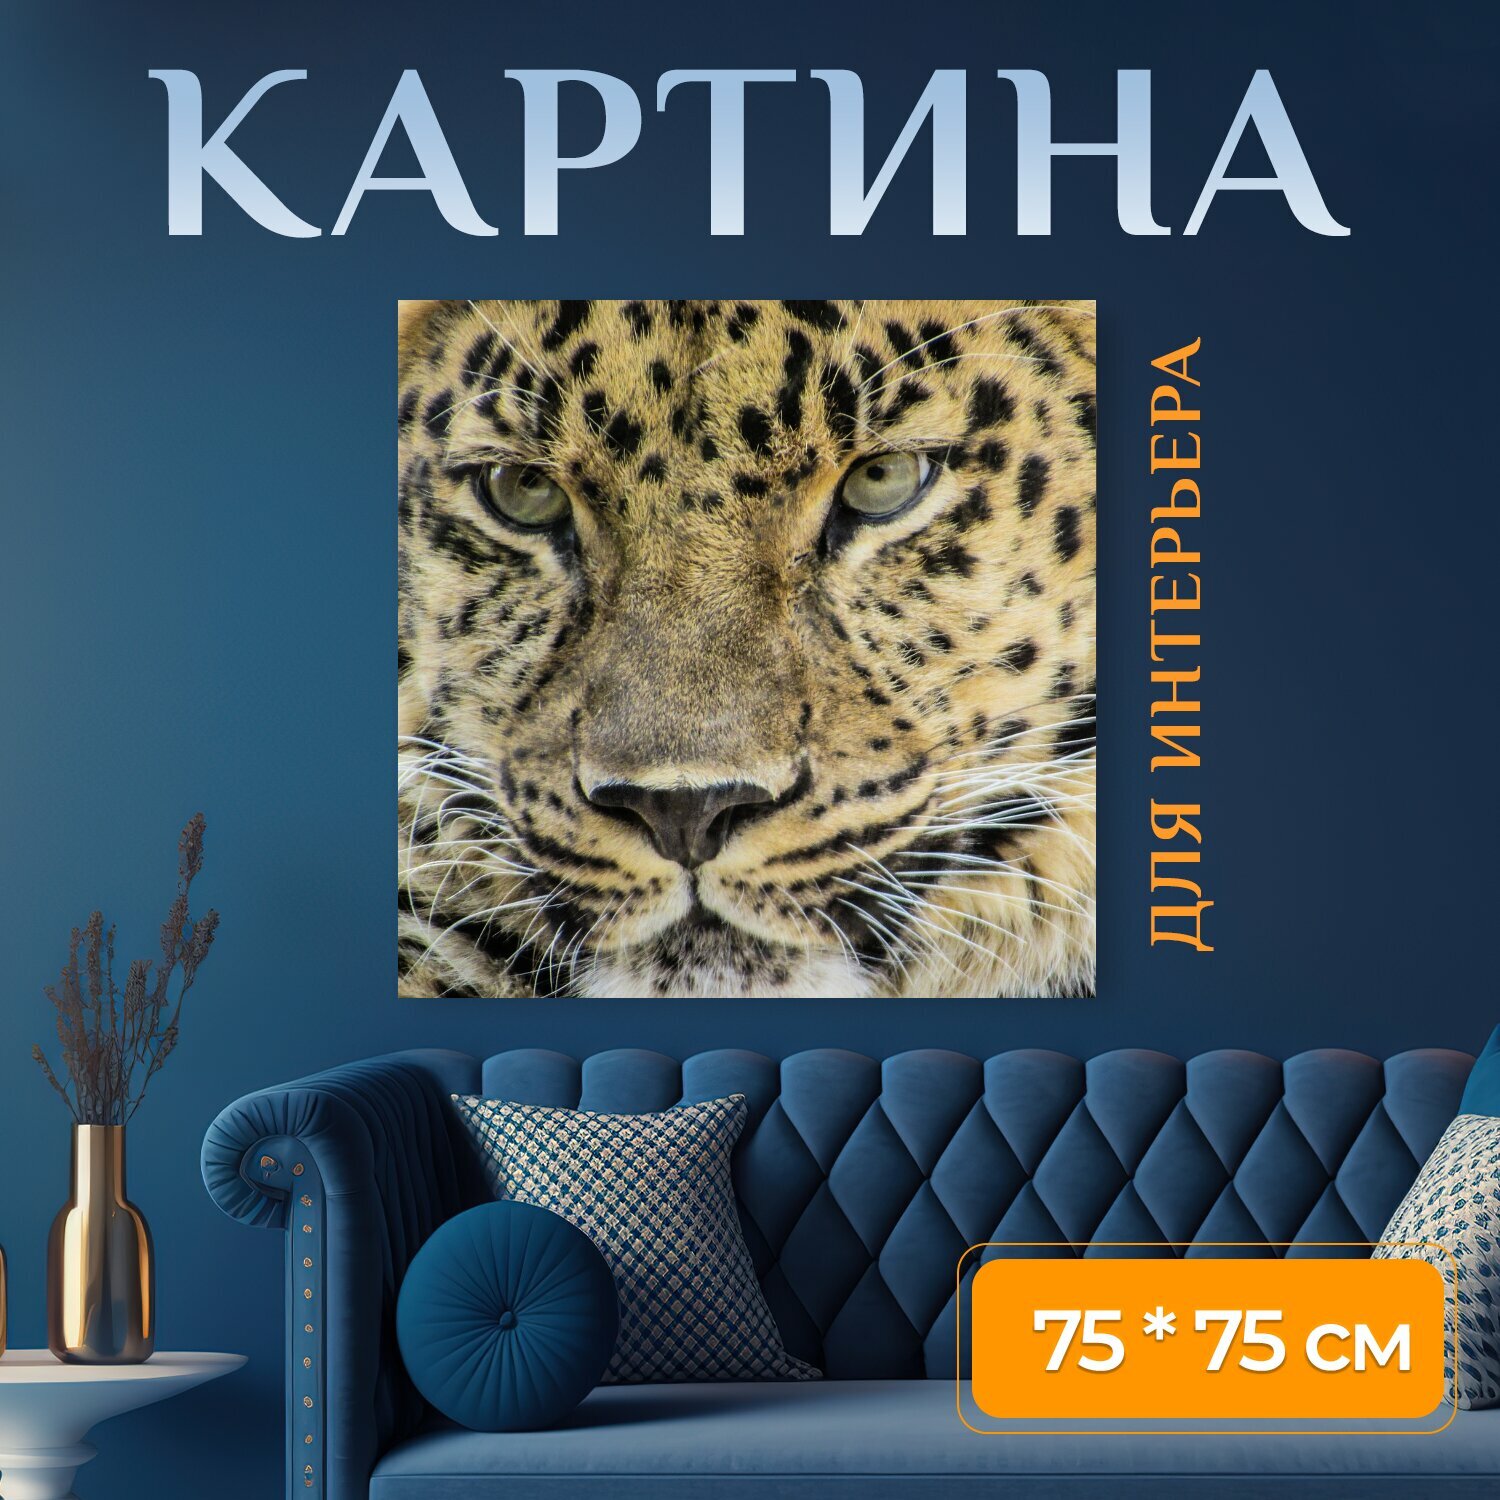 Картина на холсте "Зоопарк, леопард, кошка" на подрамнике 75х75 см. для интерьера